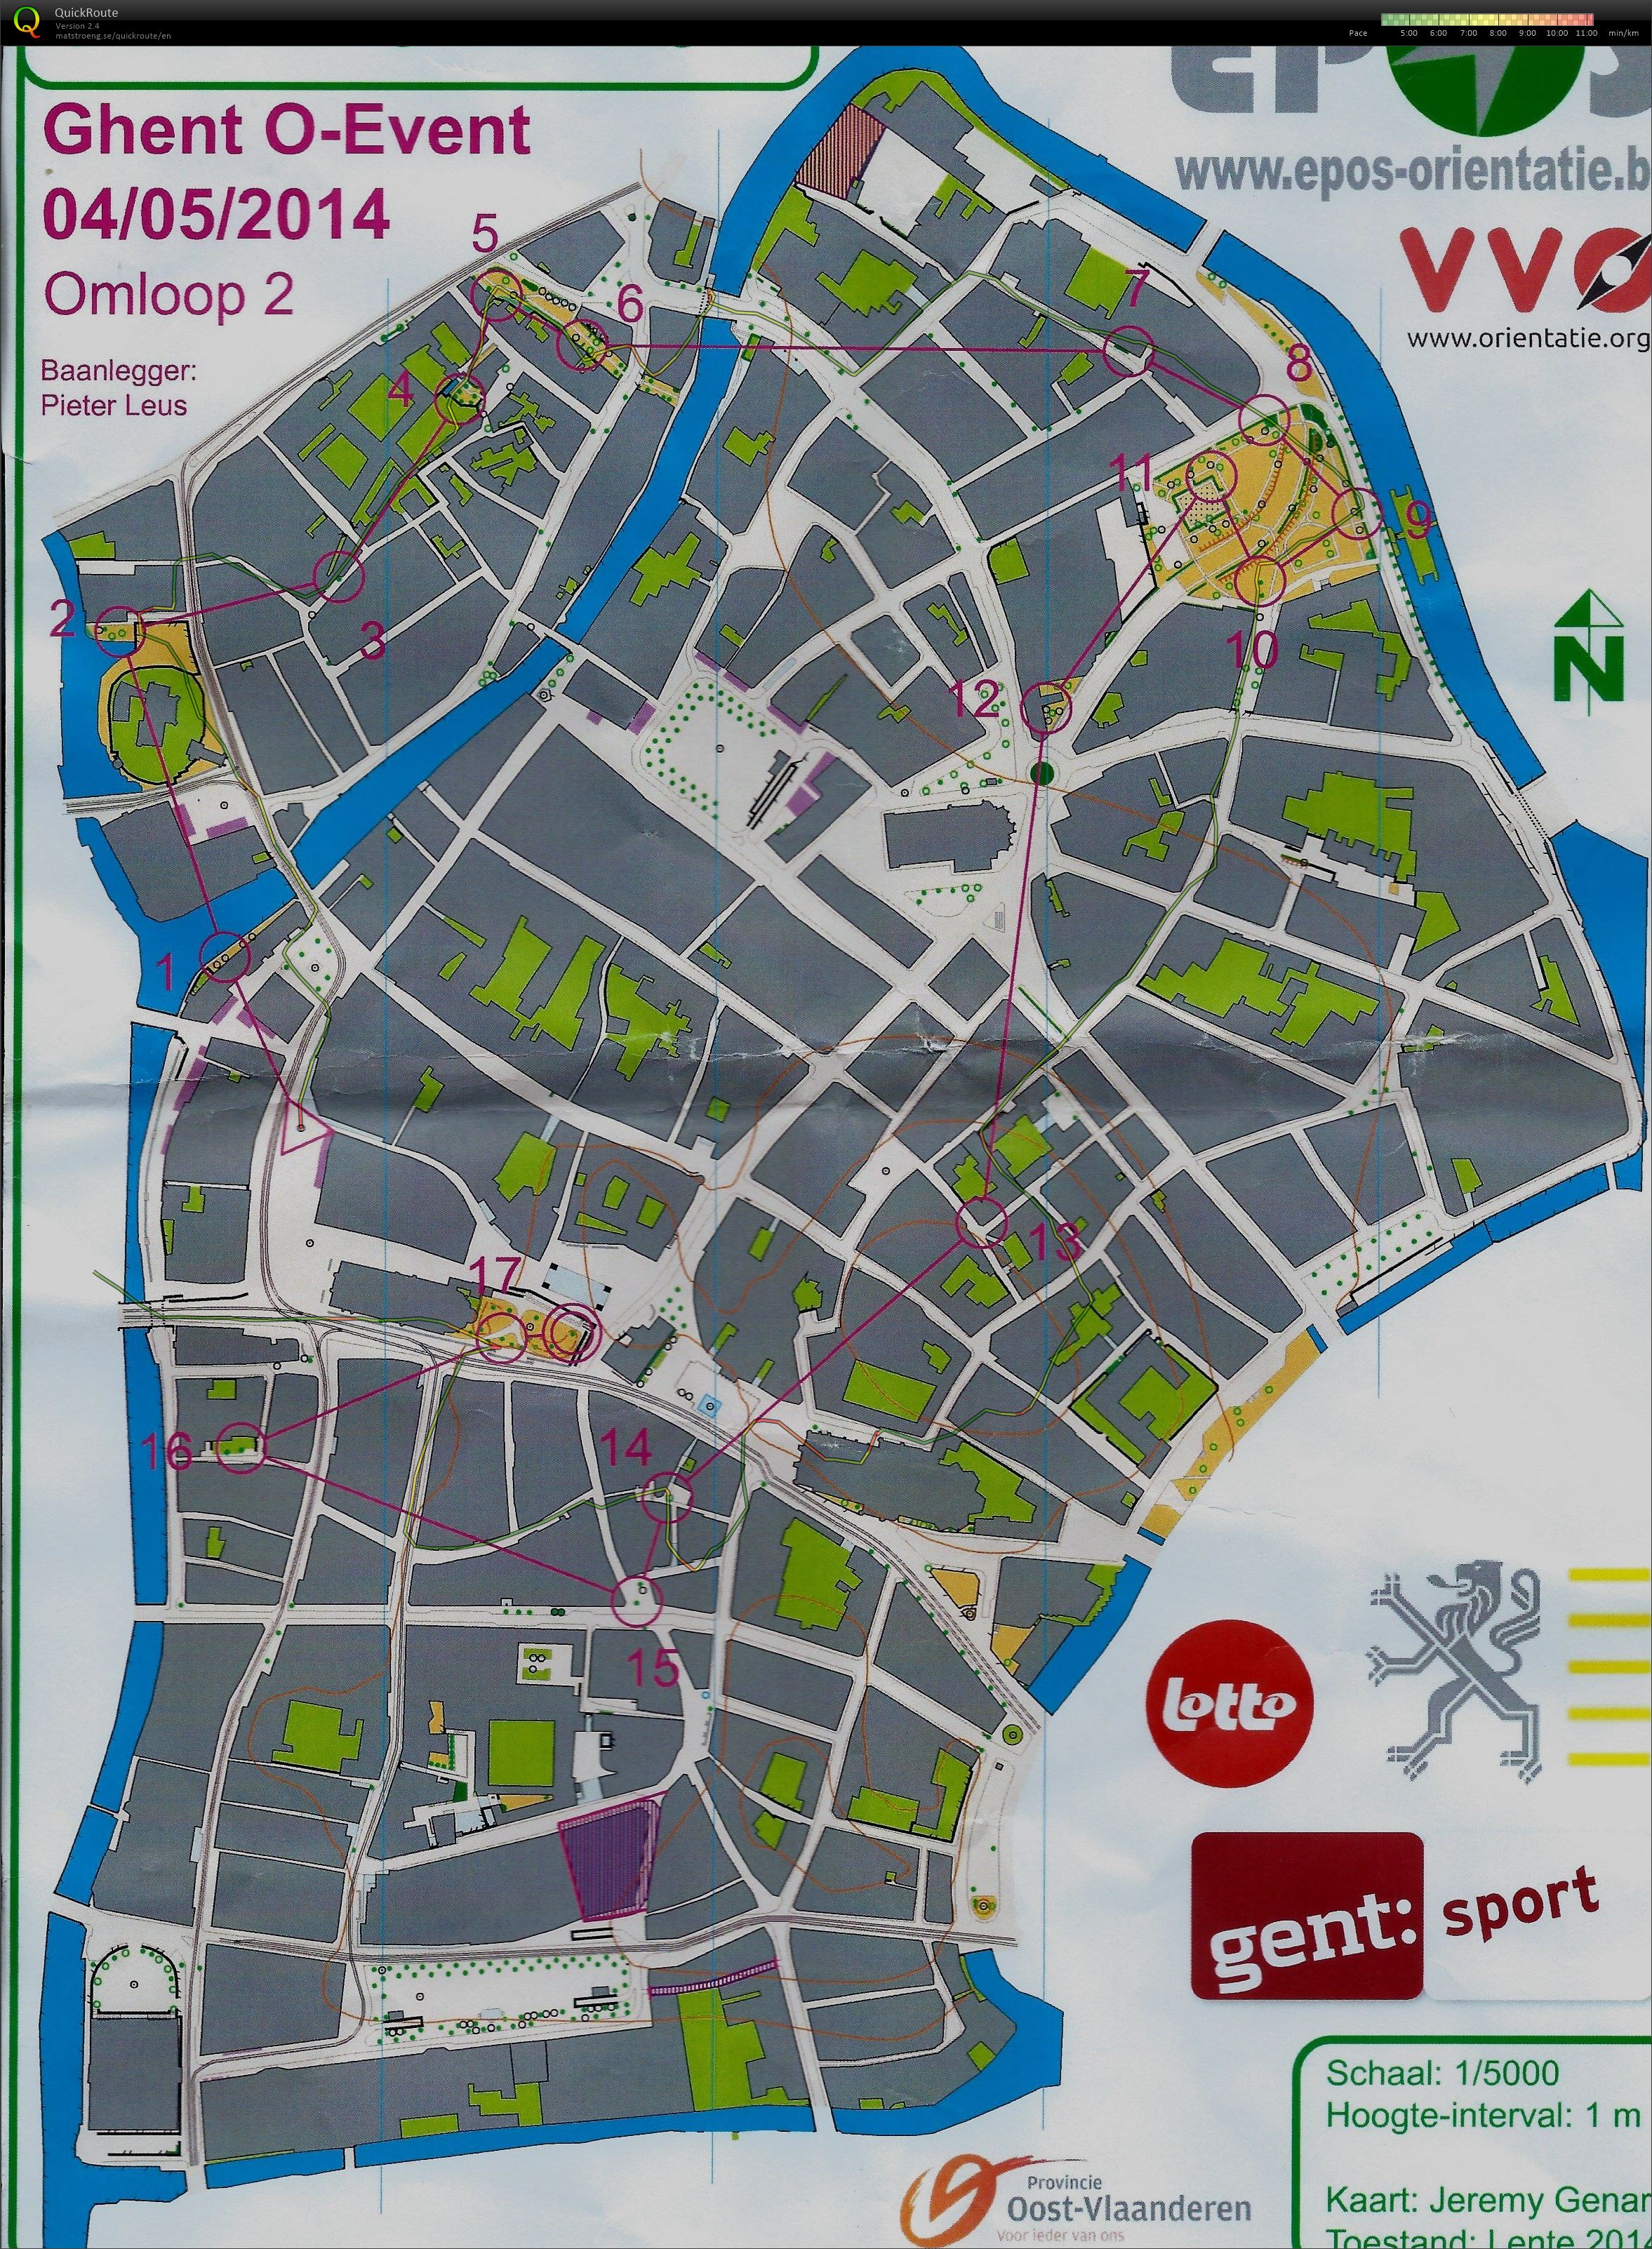 Ghent city (20.07.2022)